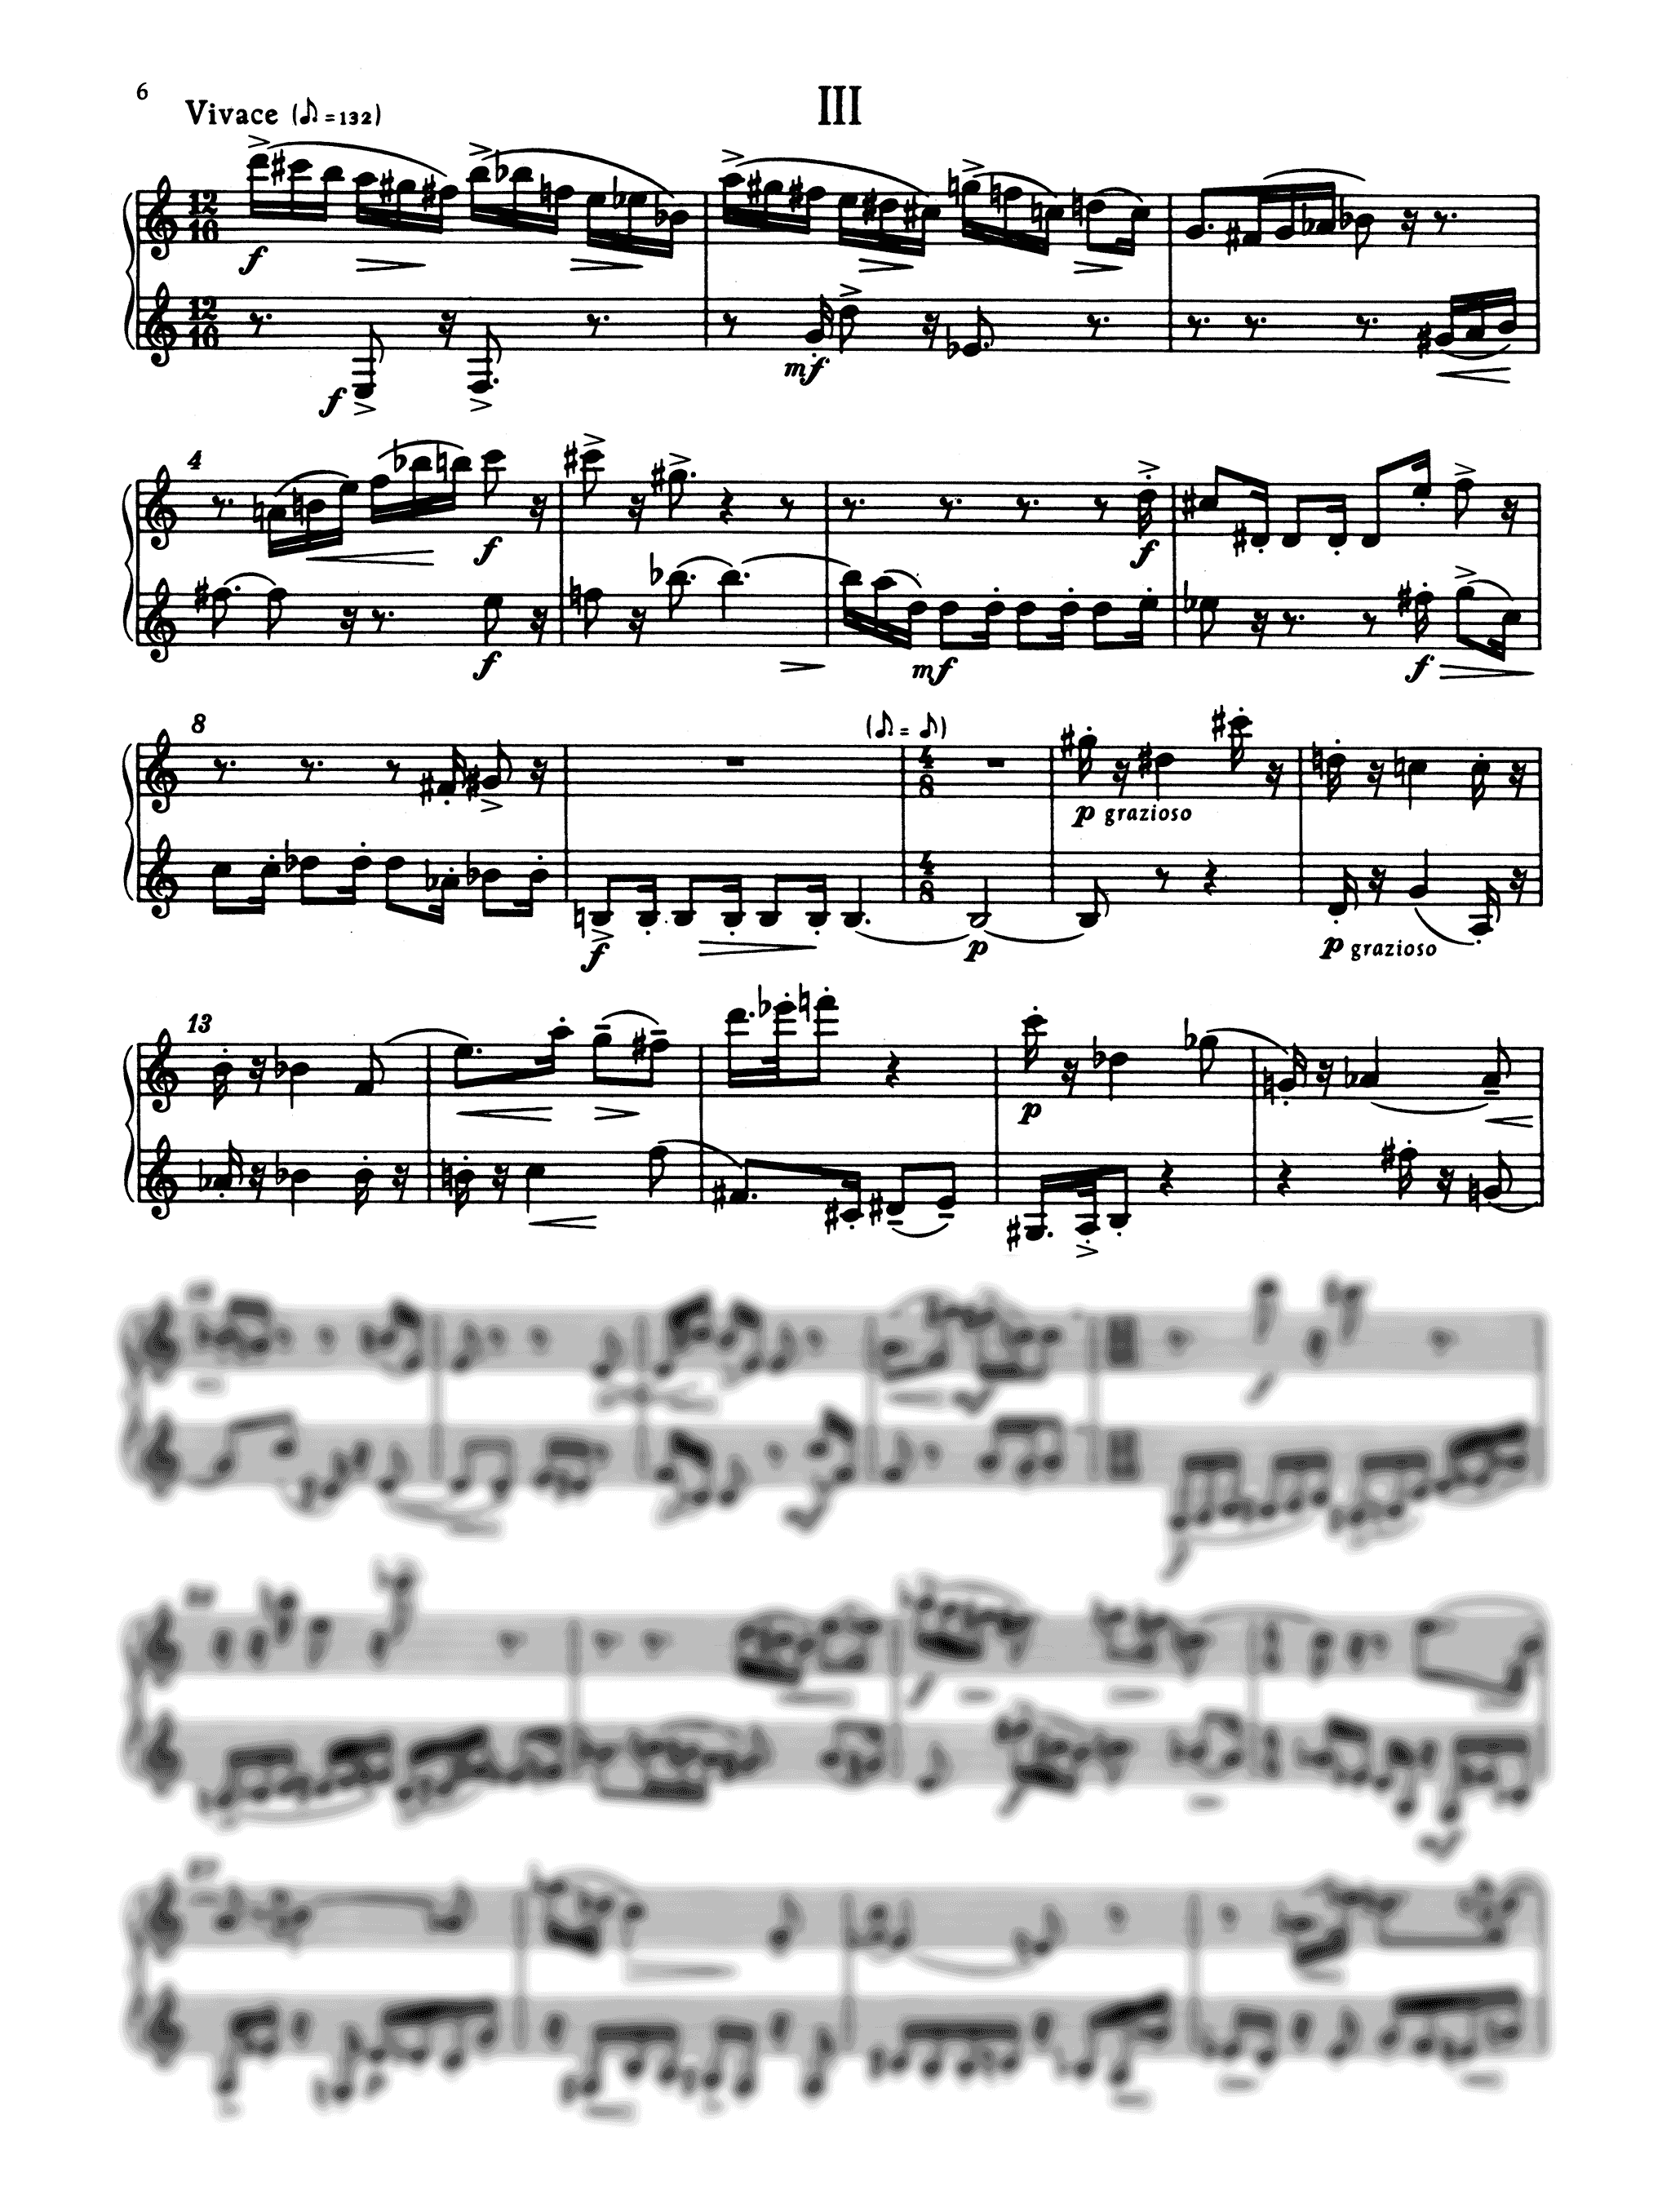 Krenek Sonatina, Op. 92/2b - Movement 3